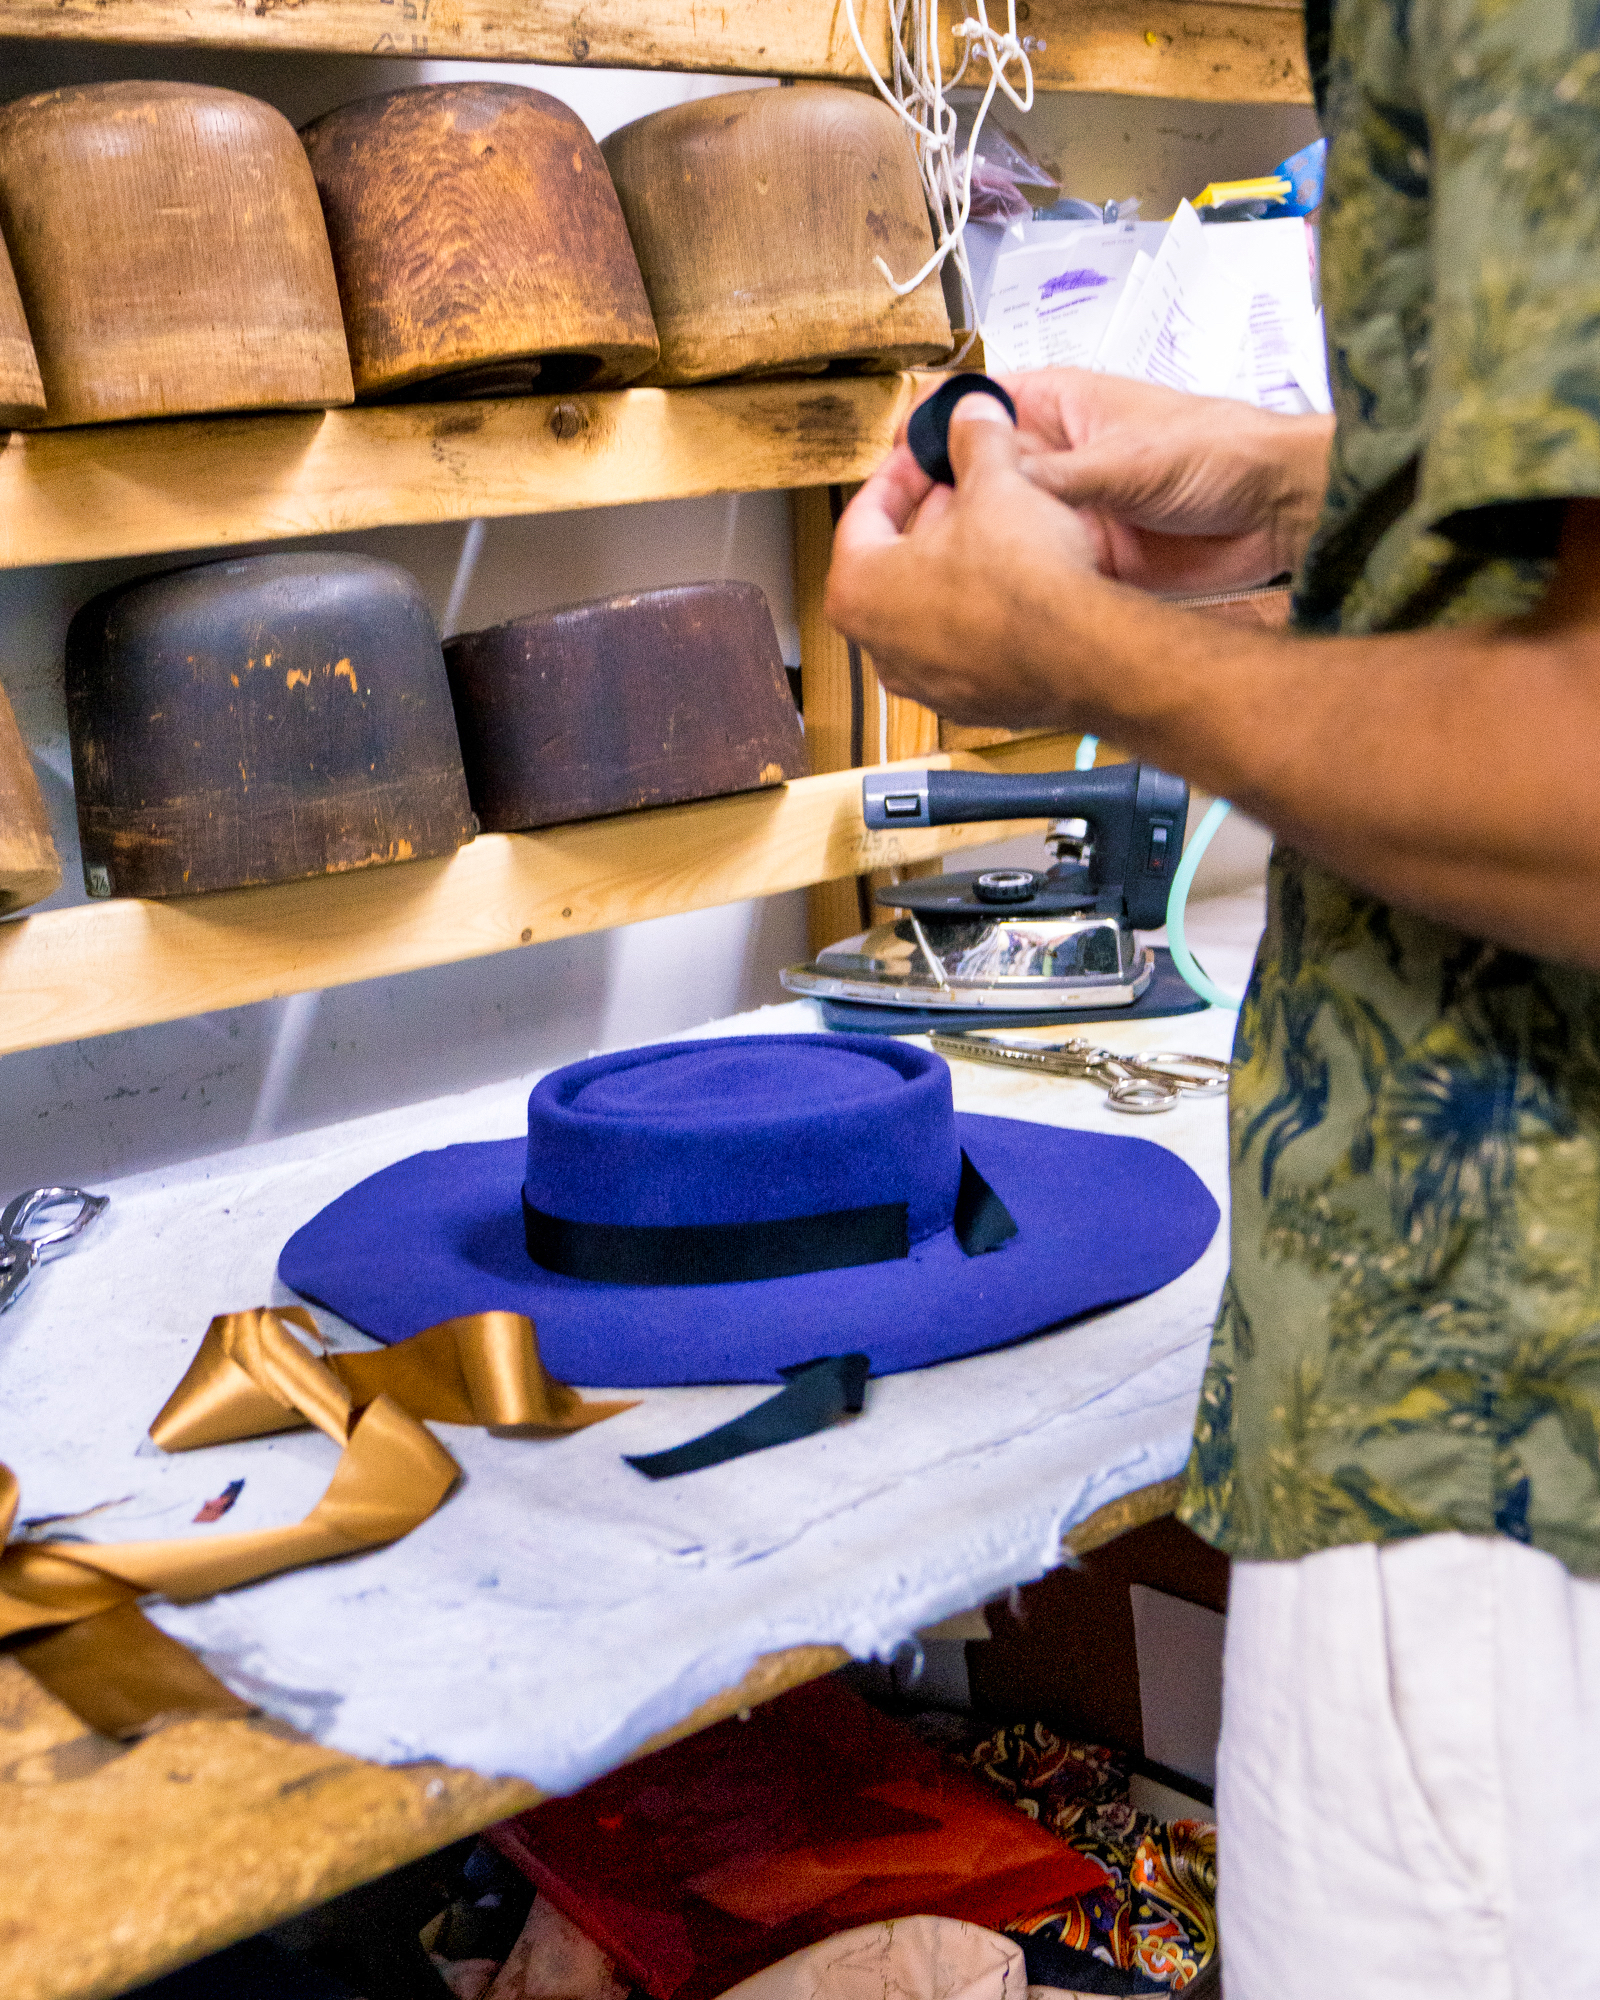 pork pie hat in navy blue color made by brandon franklin at bm franklin co